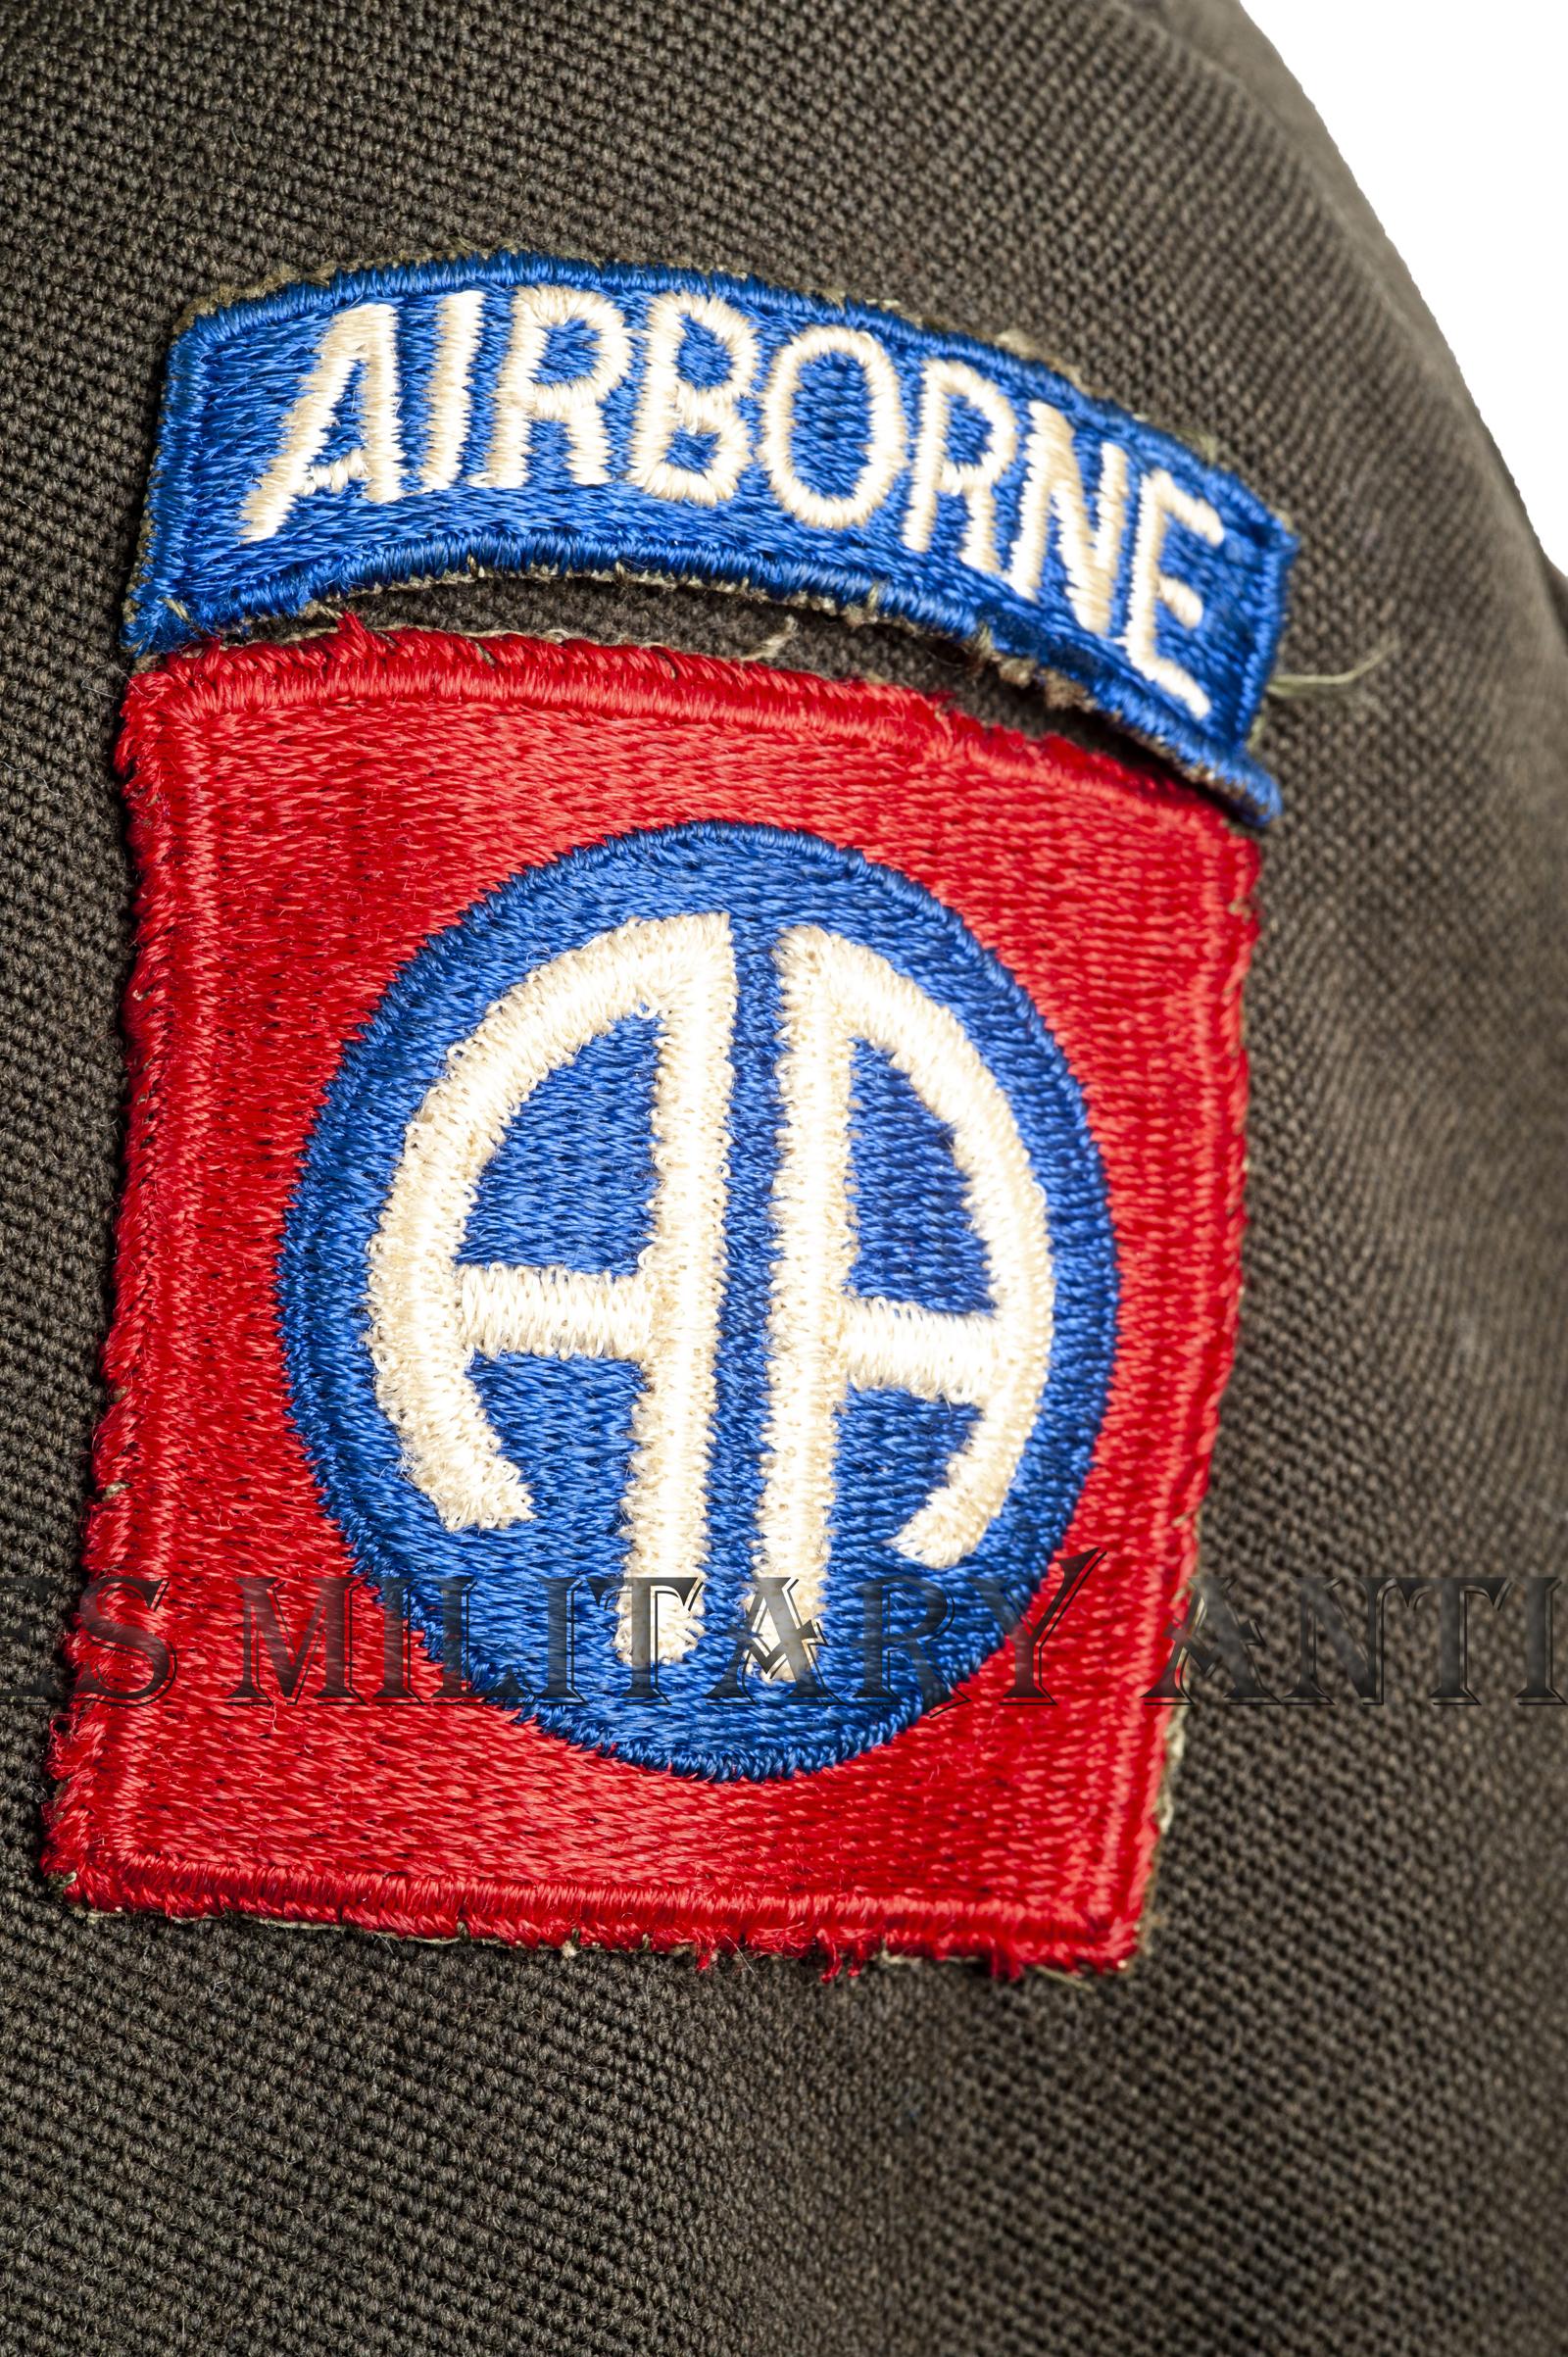 blouson-ike-jacket-officier-engineer-82eme-airborne-us-(5)